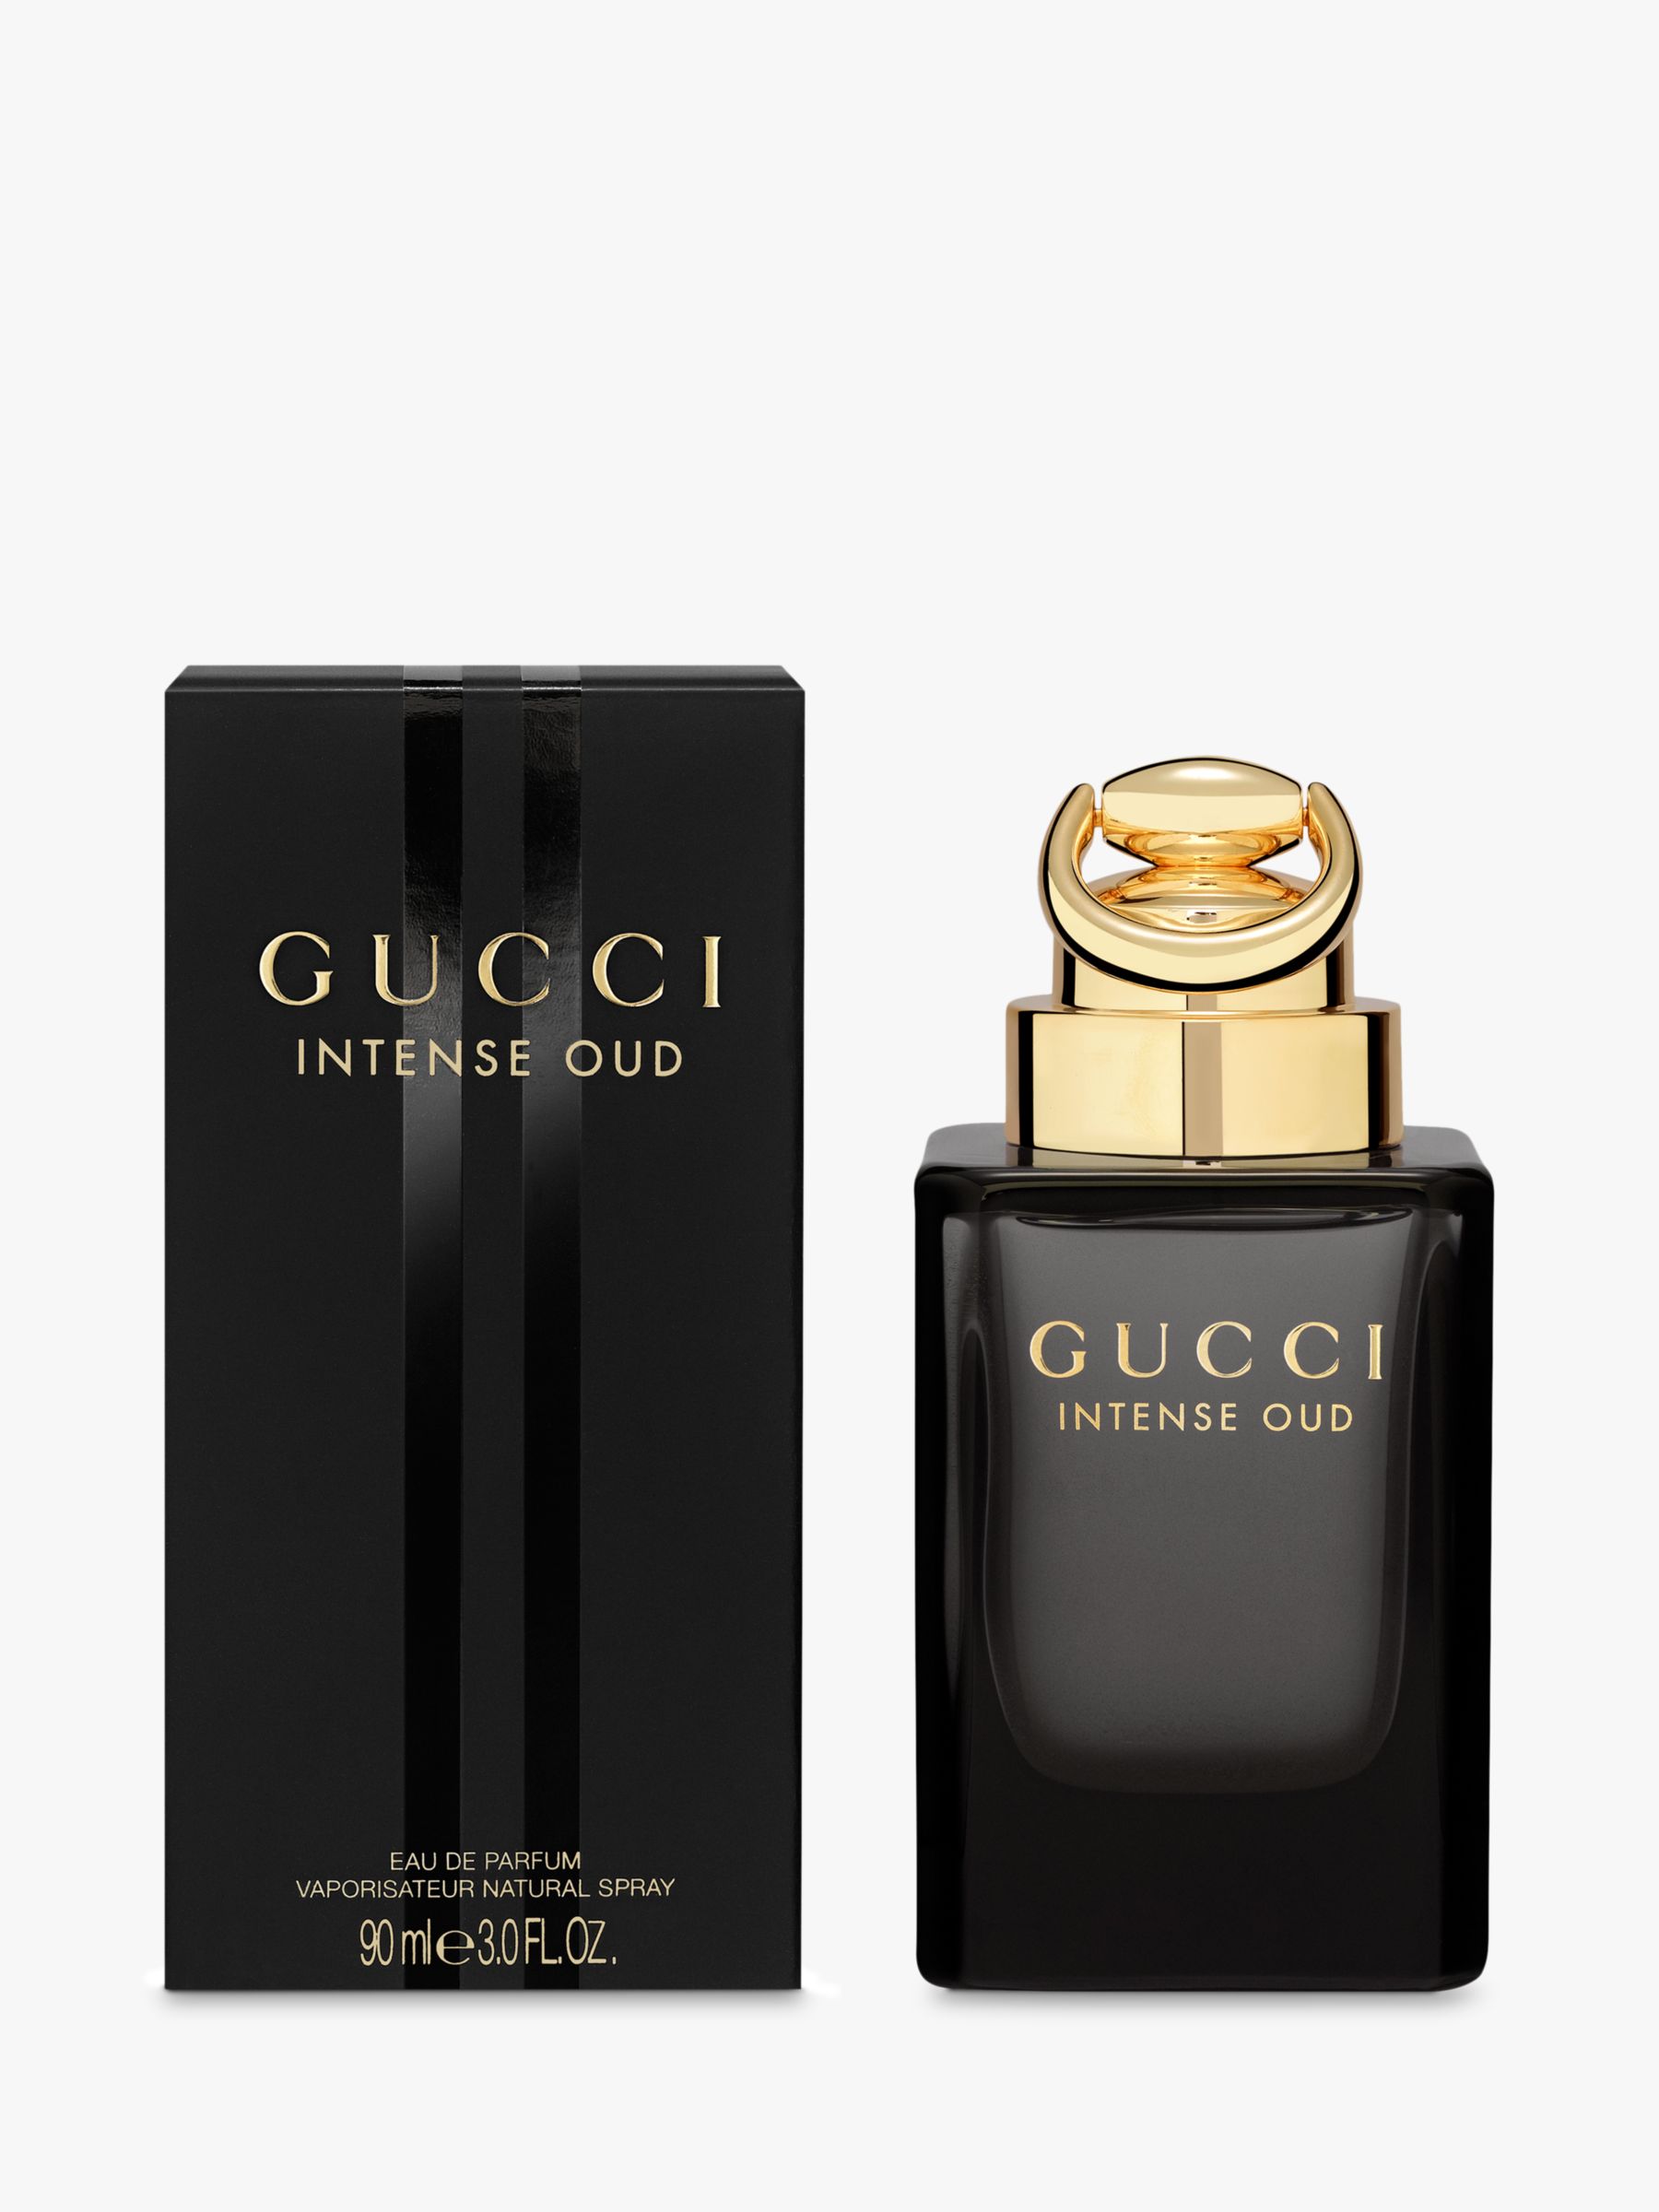 gucci perfume intense oud price